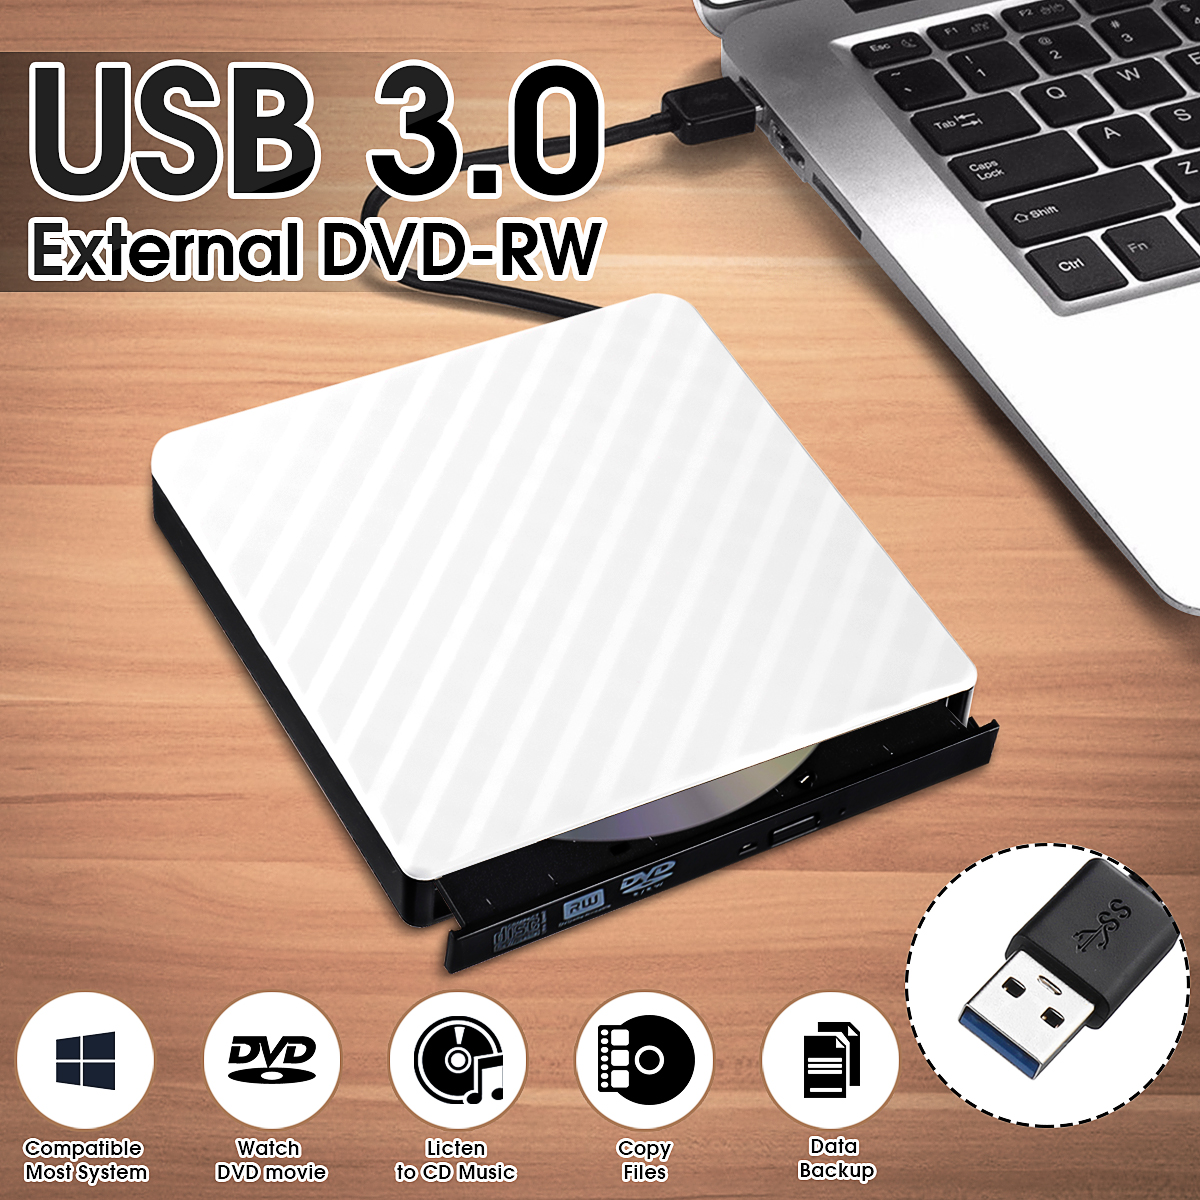 External-USB-30-DVD-RW-CD-Writer-Slim-Carbon-Grain-Drive-Burner-Reader-Player-For-PC-Laptop-Optical--1536013-10